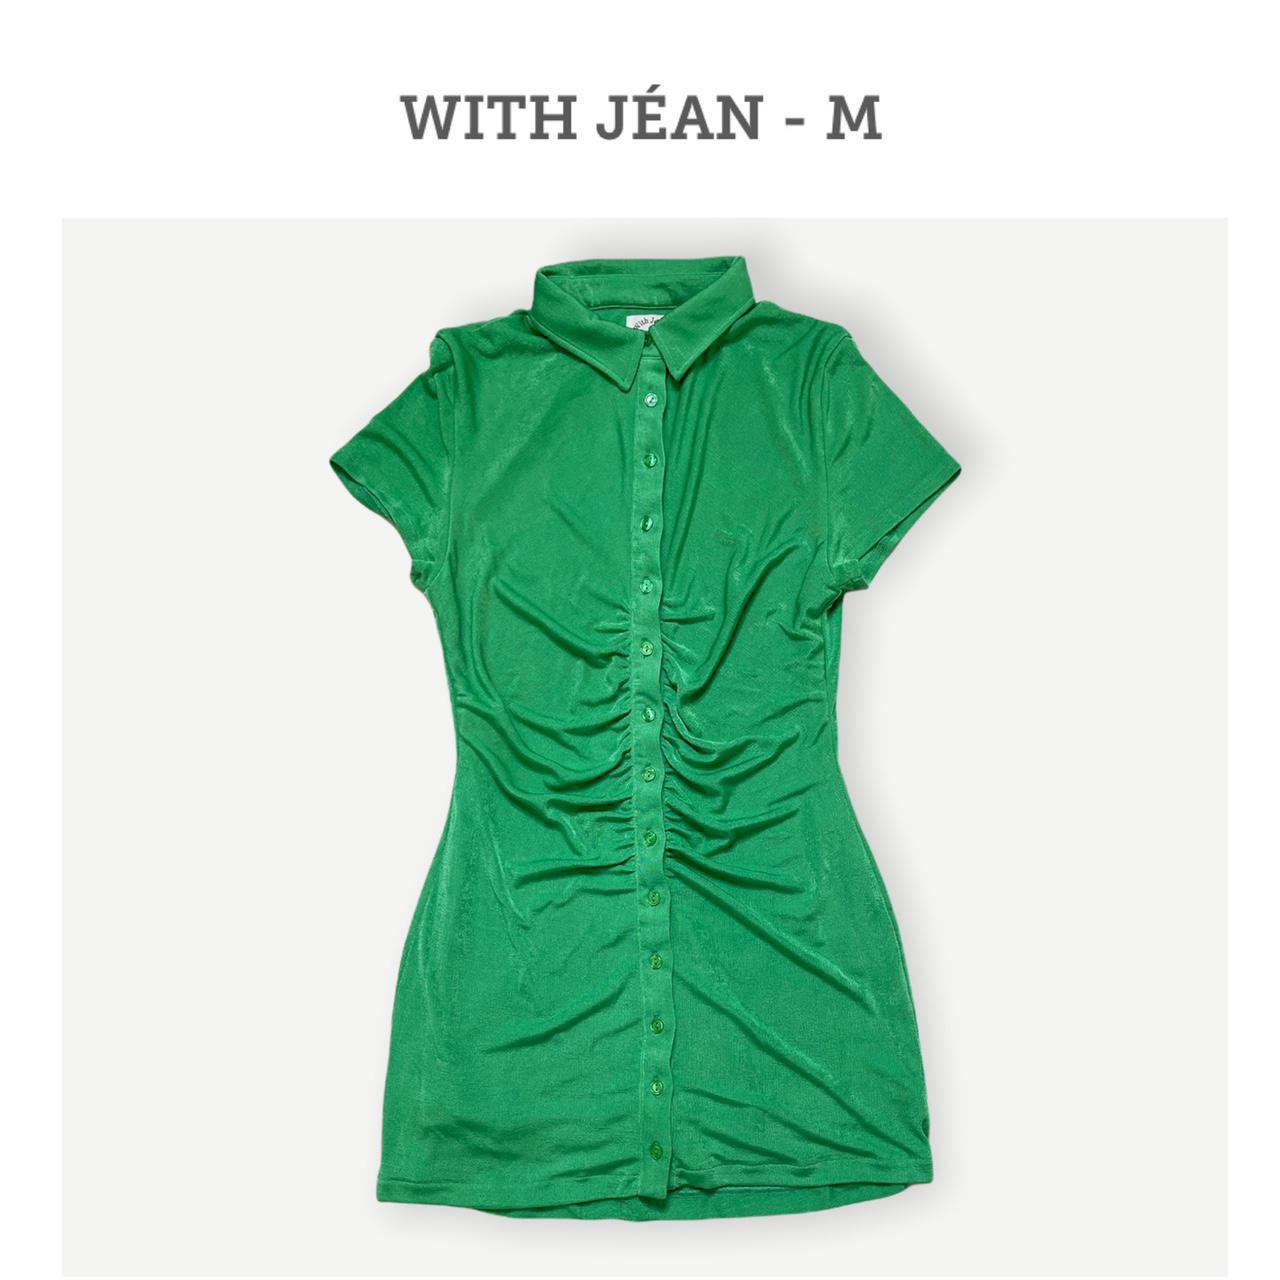 Product Image 1 - WITH JÉAN Alexa Mini Dress

-